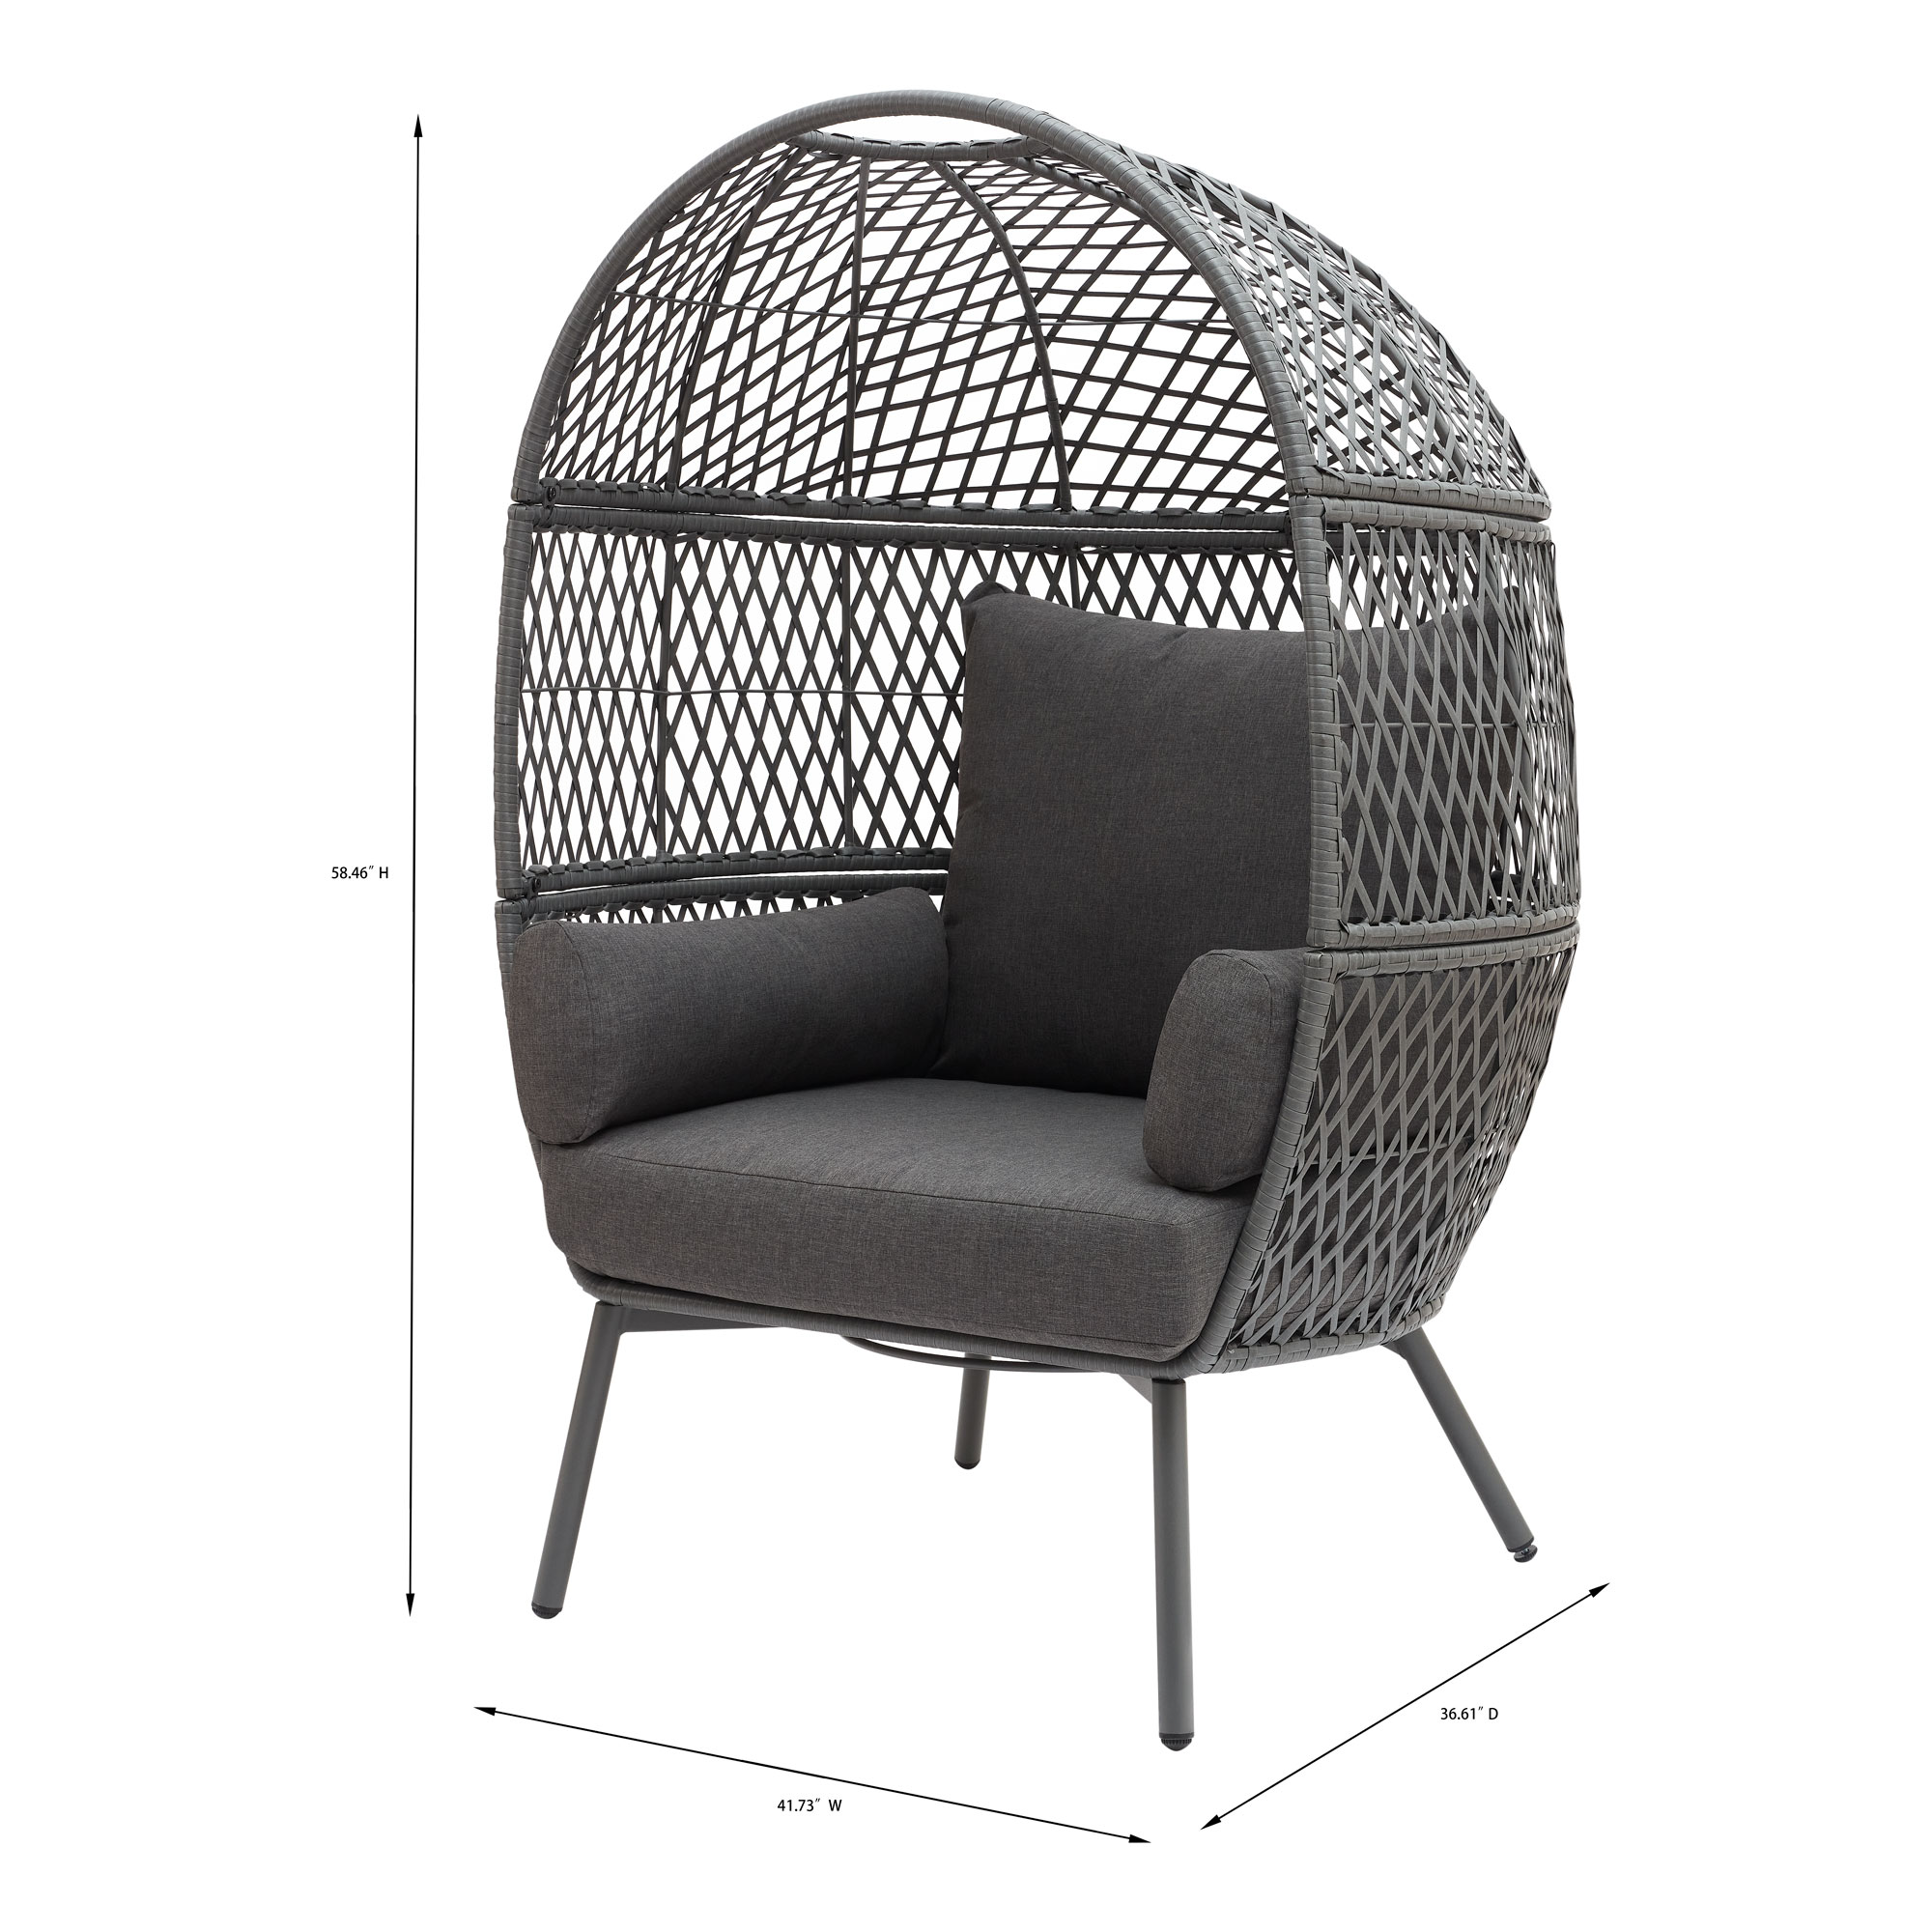 Better Homes & Garden Ventura Steel Stationary Wicker Egg Chair – Mono Gray - image 2 of 6